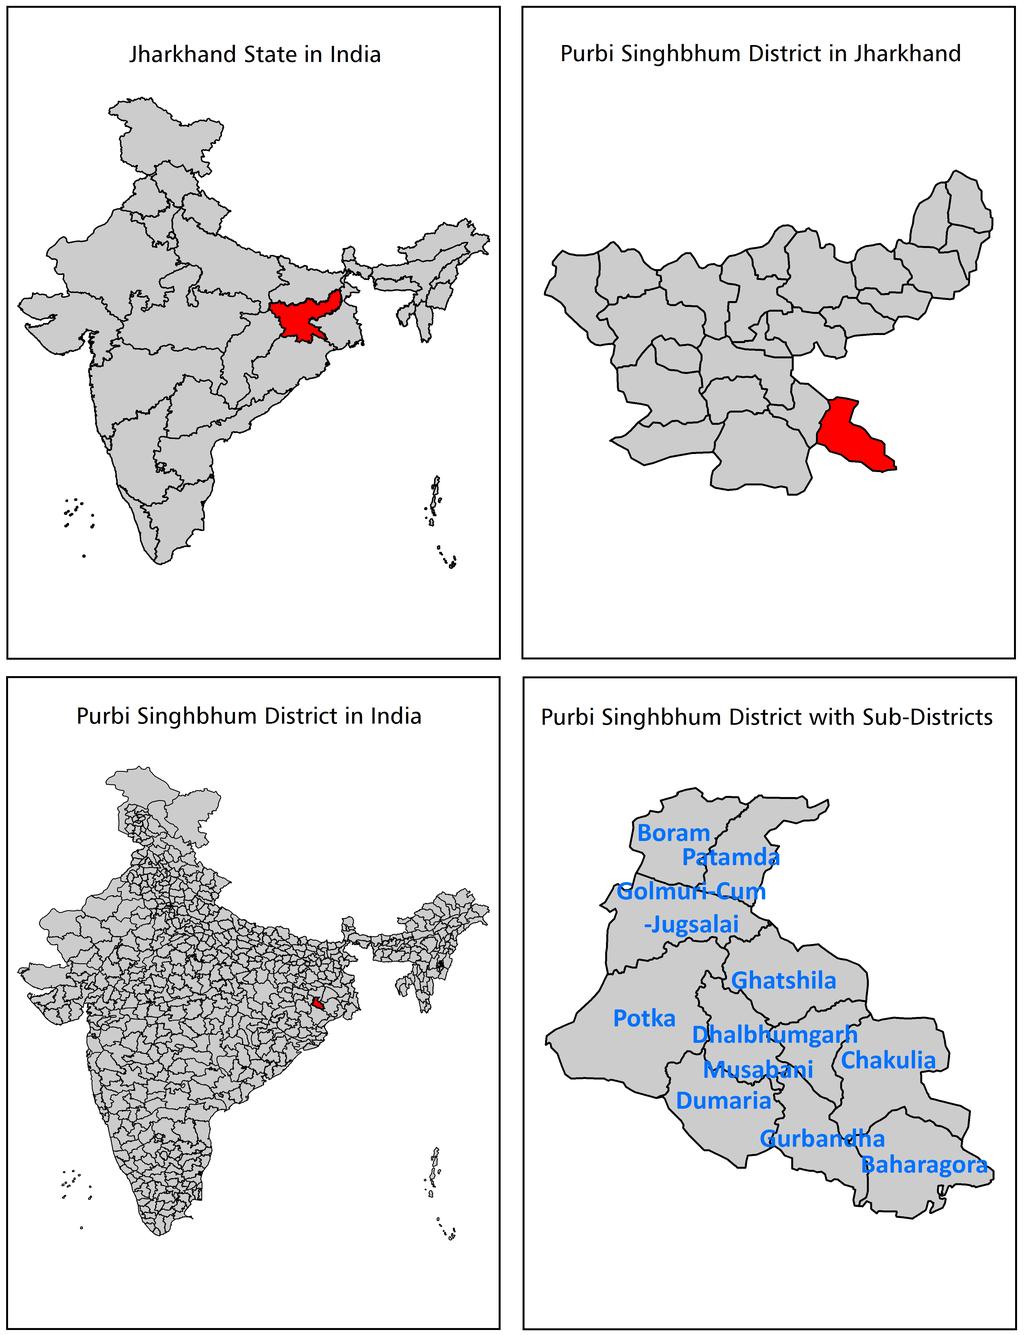 Purbi Singhbhum District Jharkhand